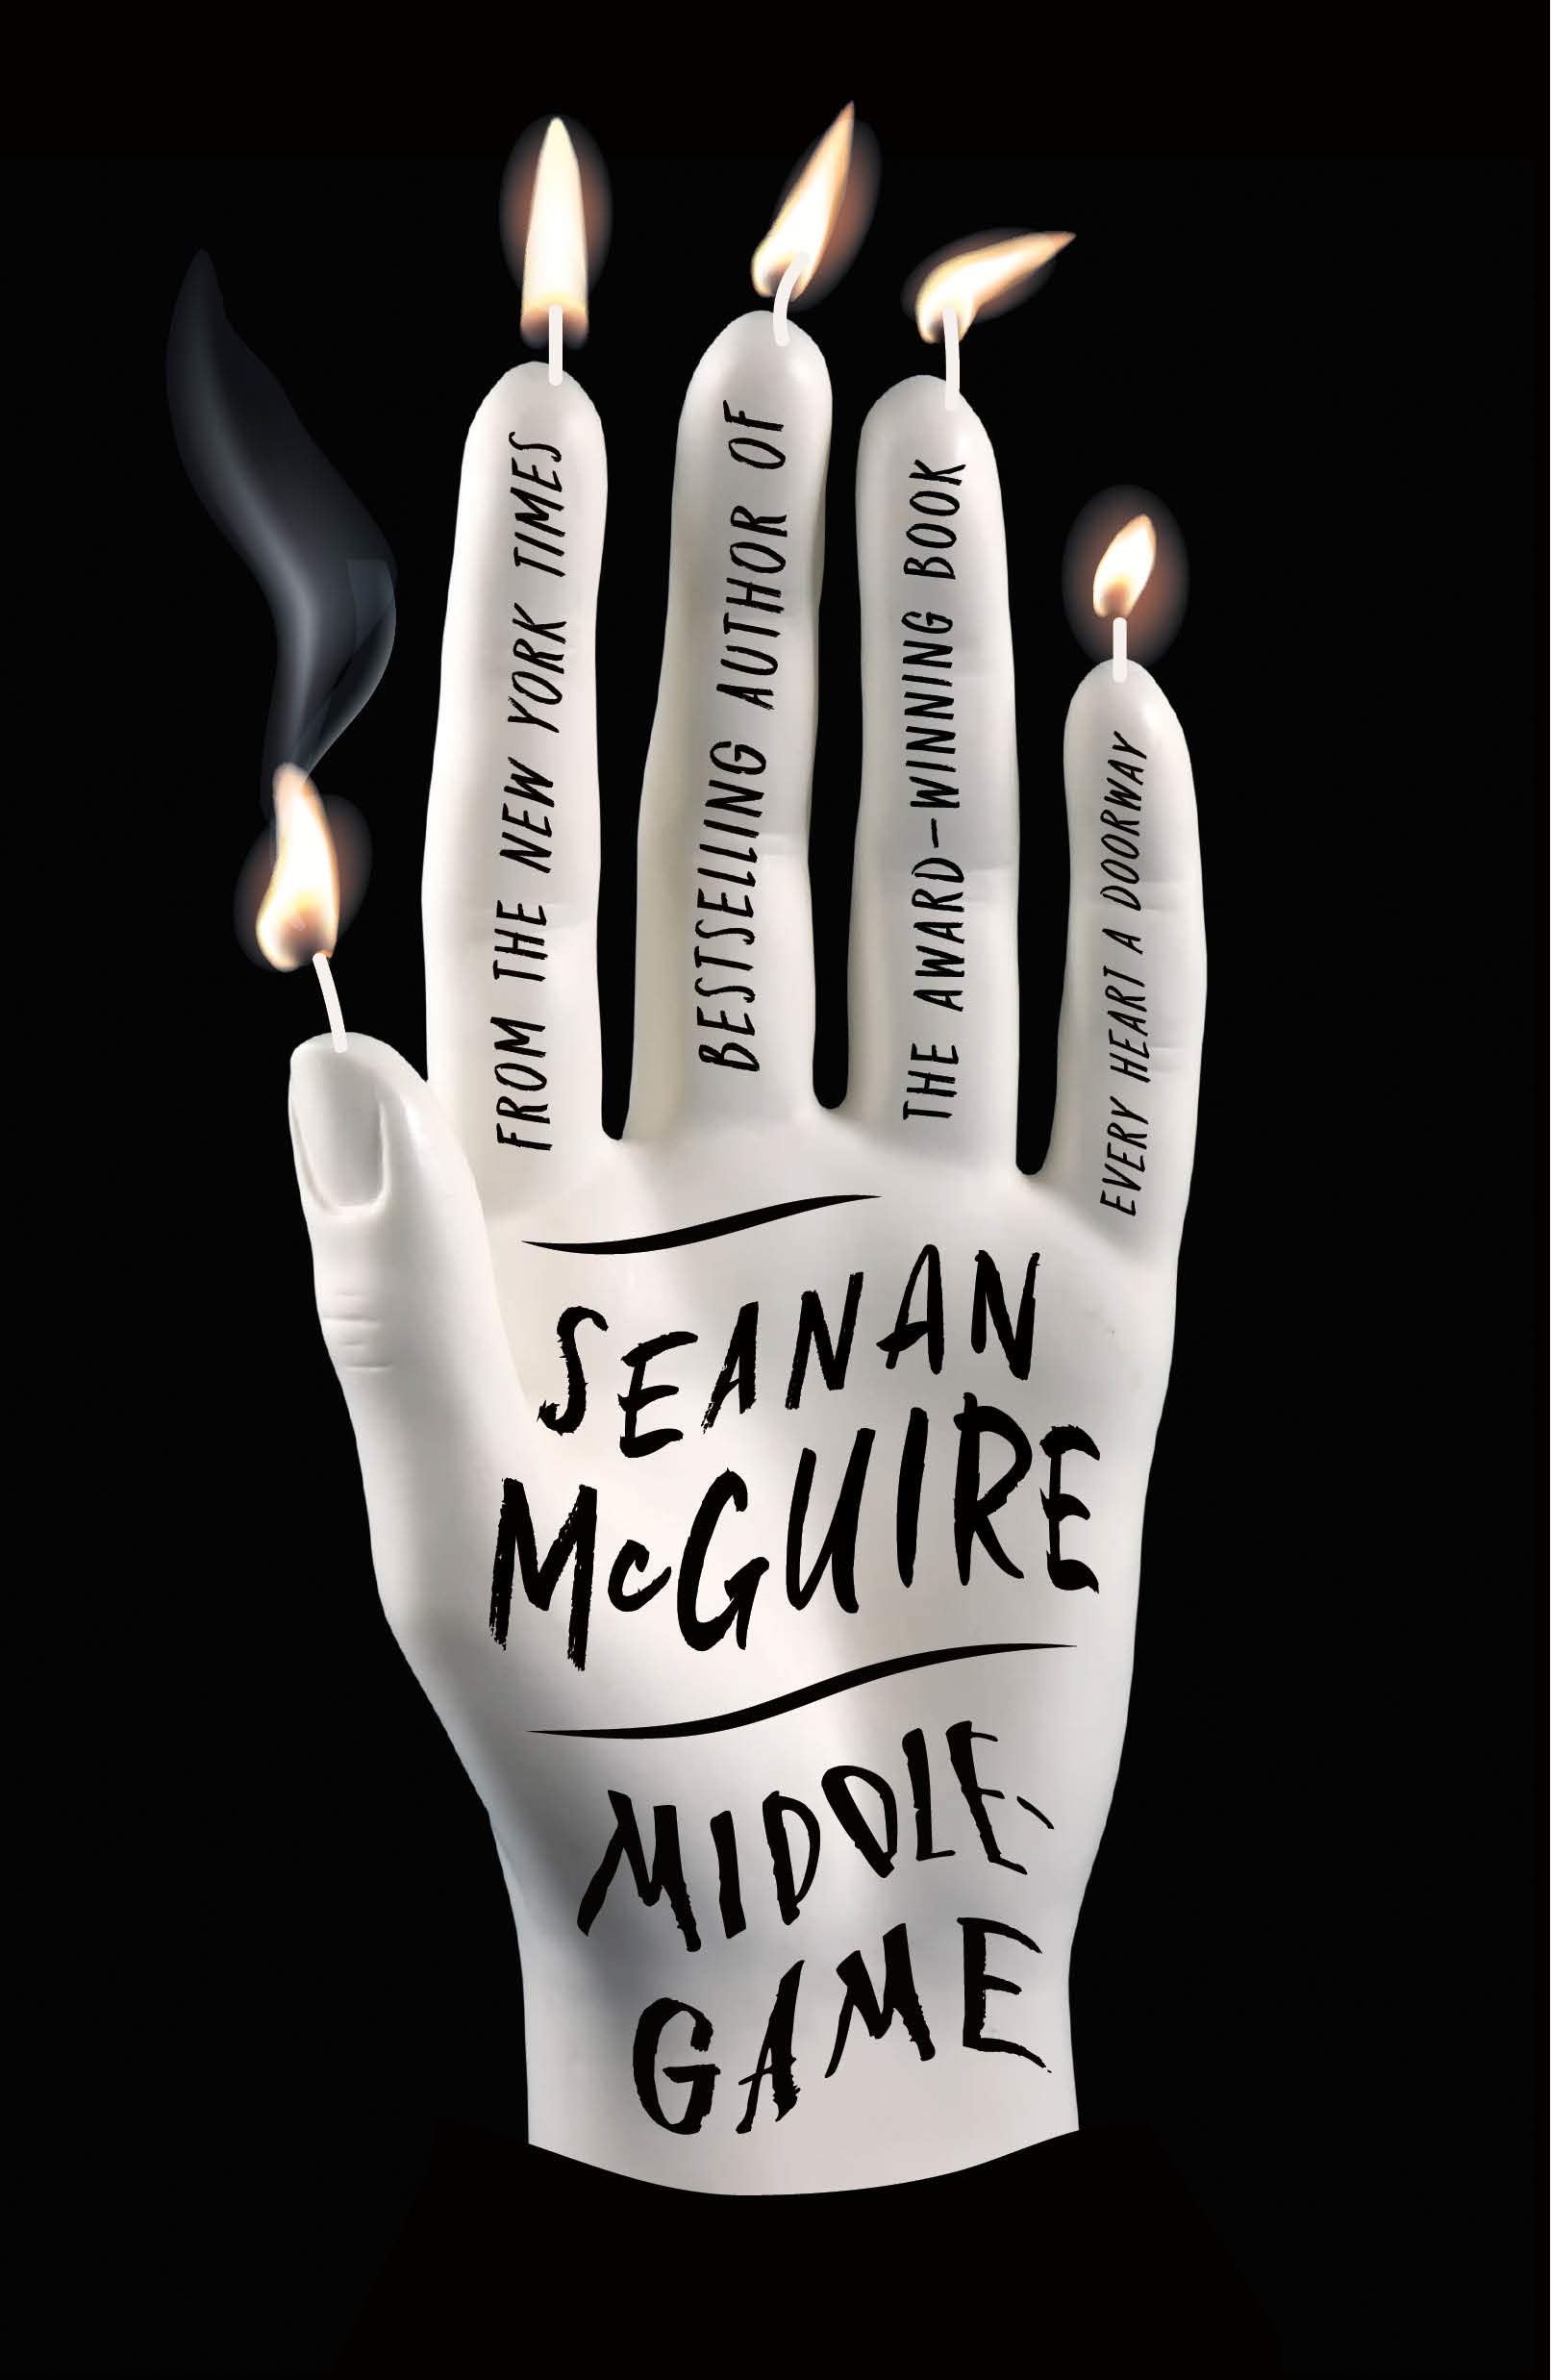 Recensione: “Middlegame” di Seanan McGuire.